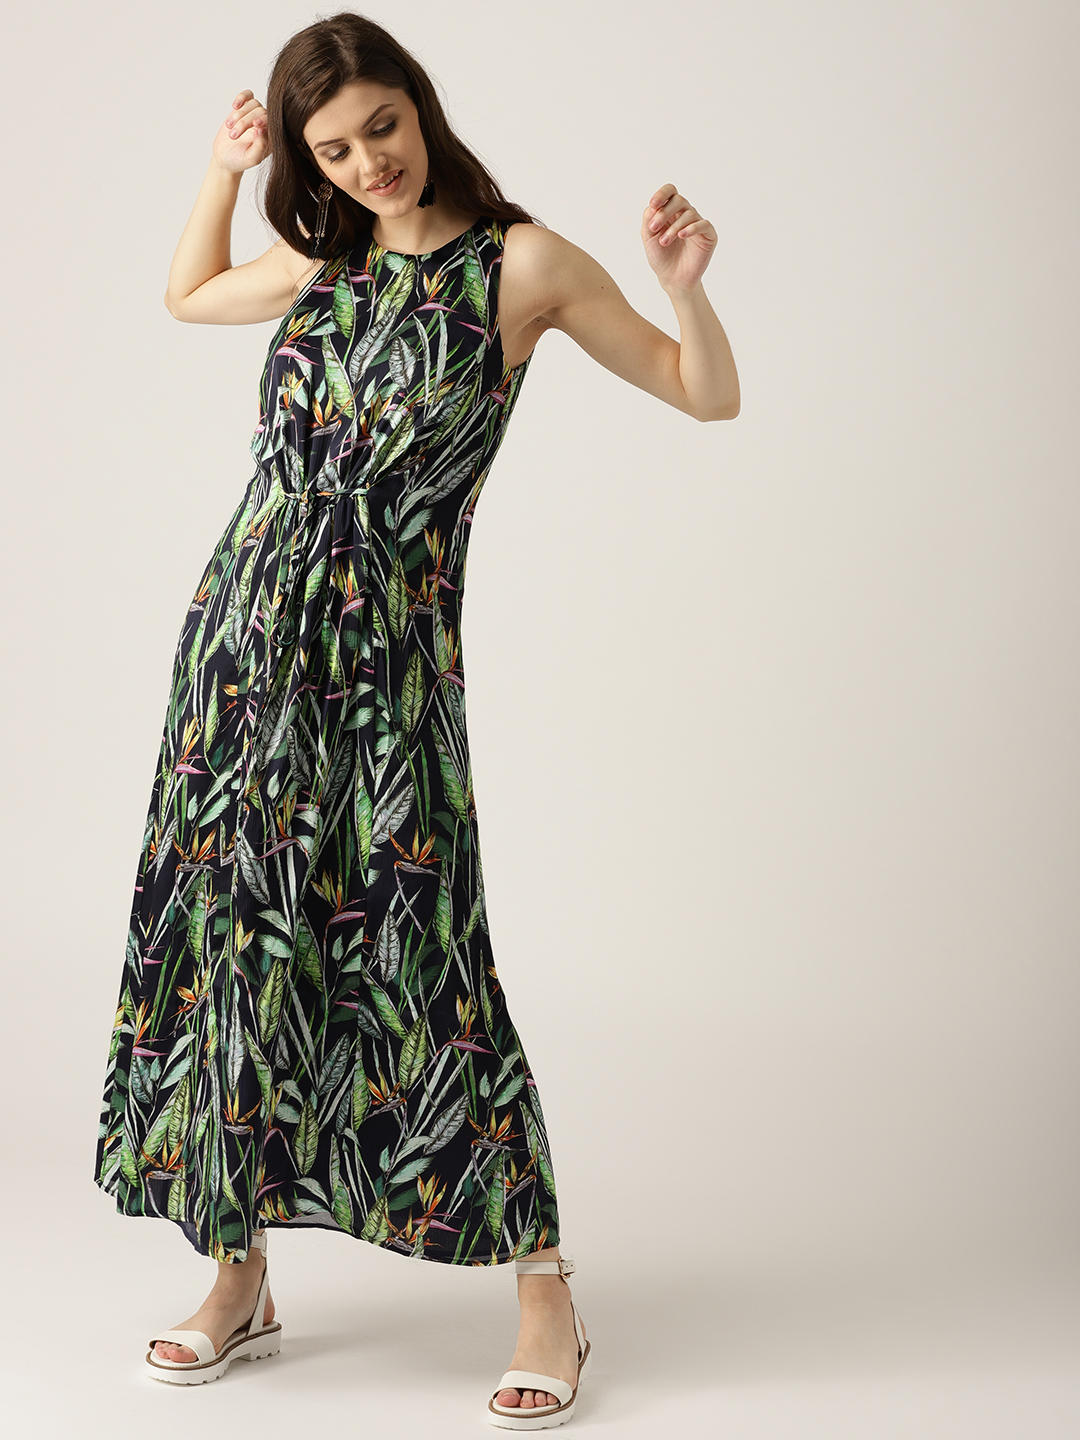 ESPRIT Women Navy & Green Printed Maxi Dress Price in India